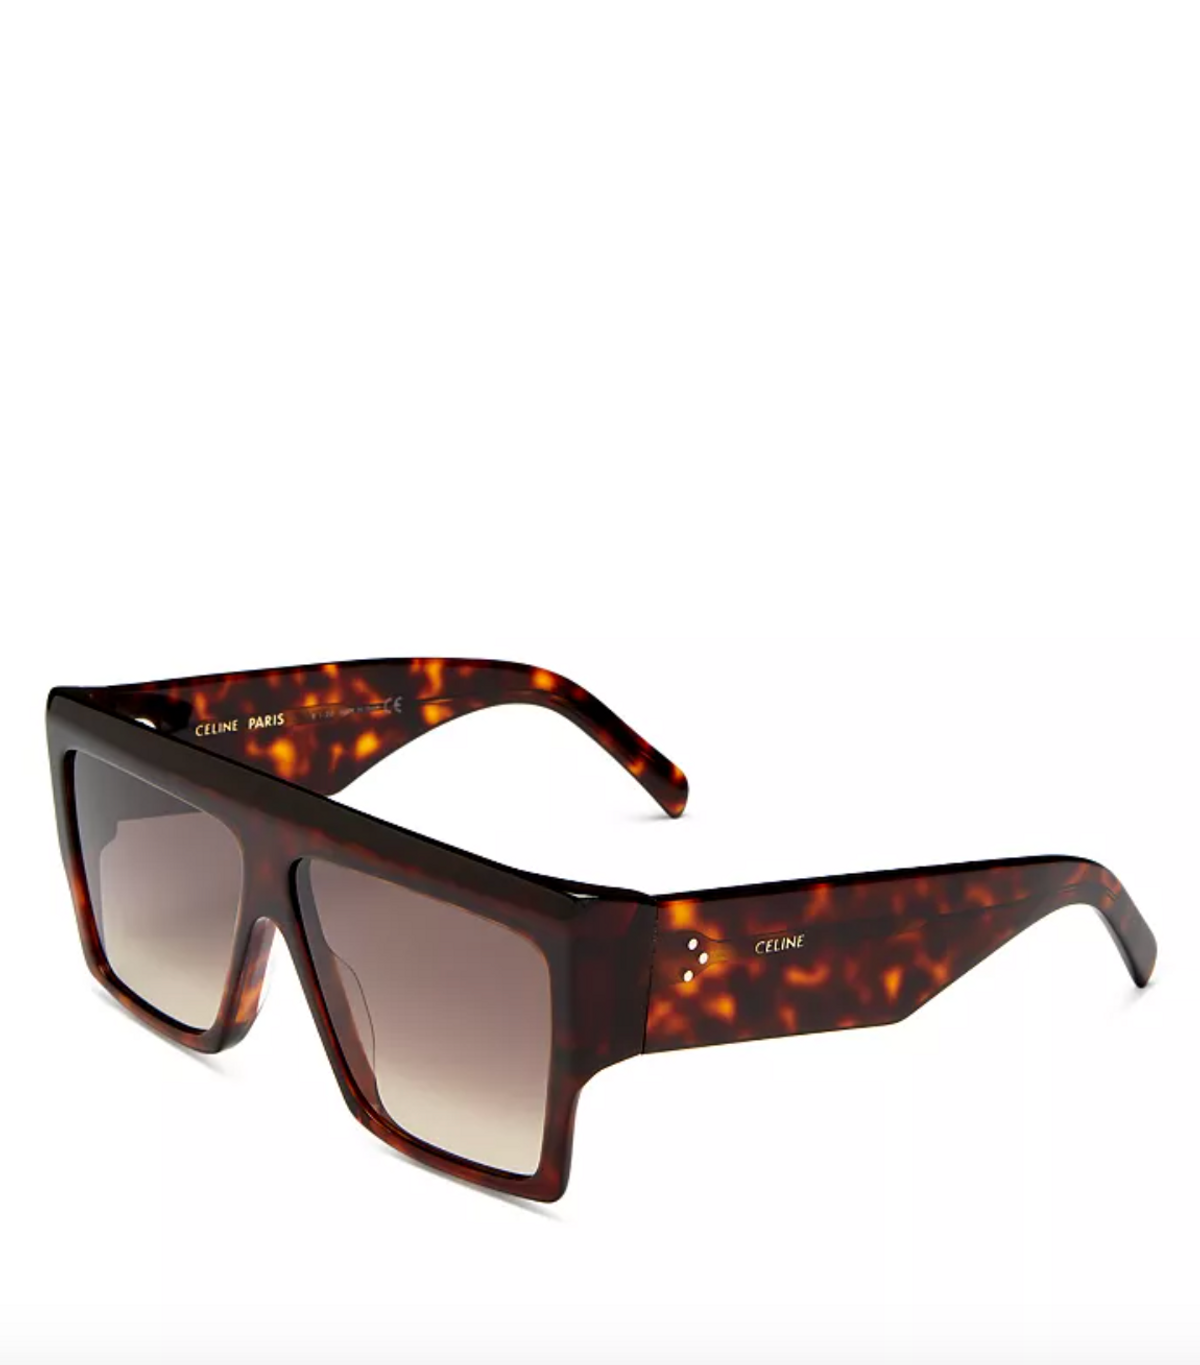 Unisex Flat Top Square Sunglasses, 60mm